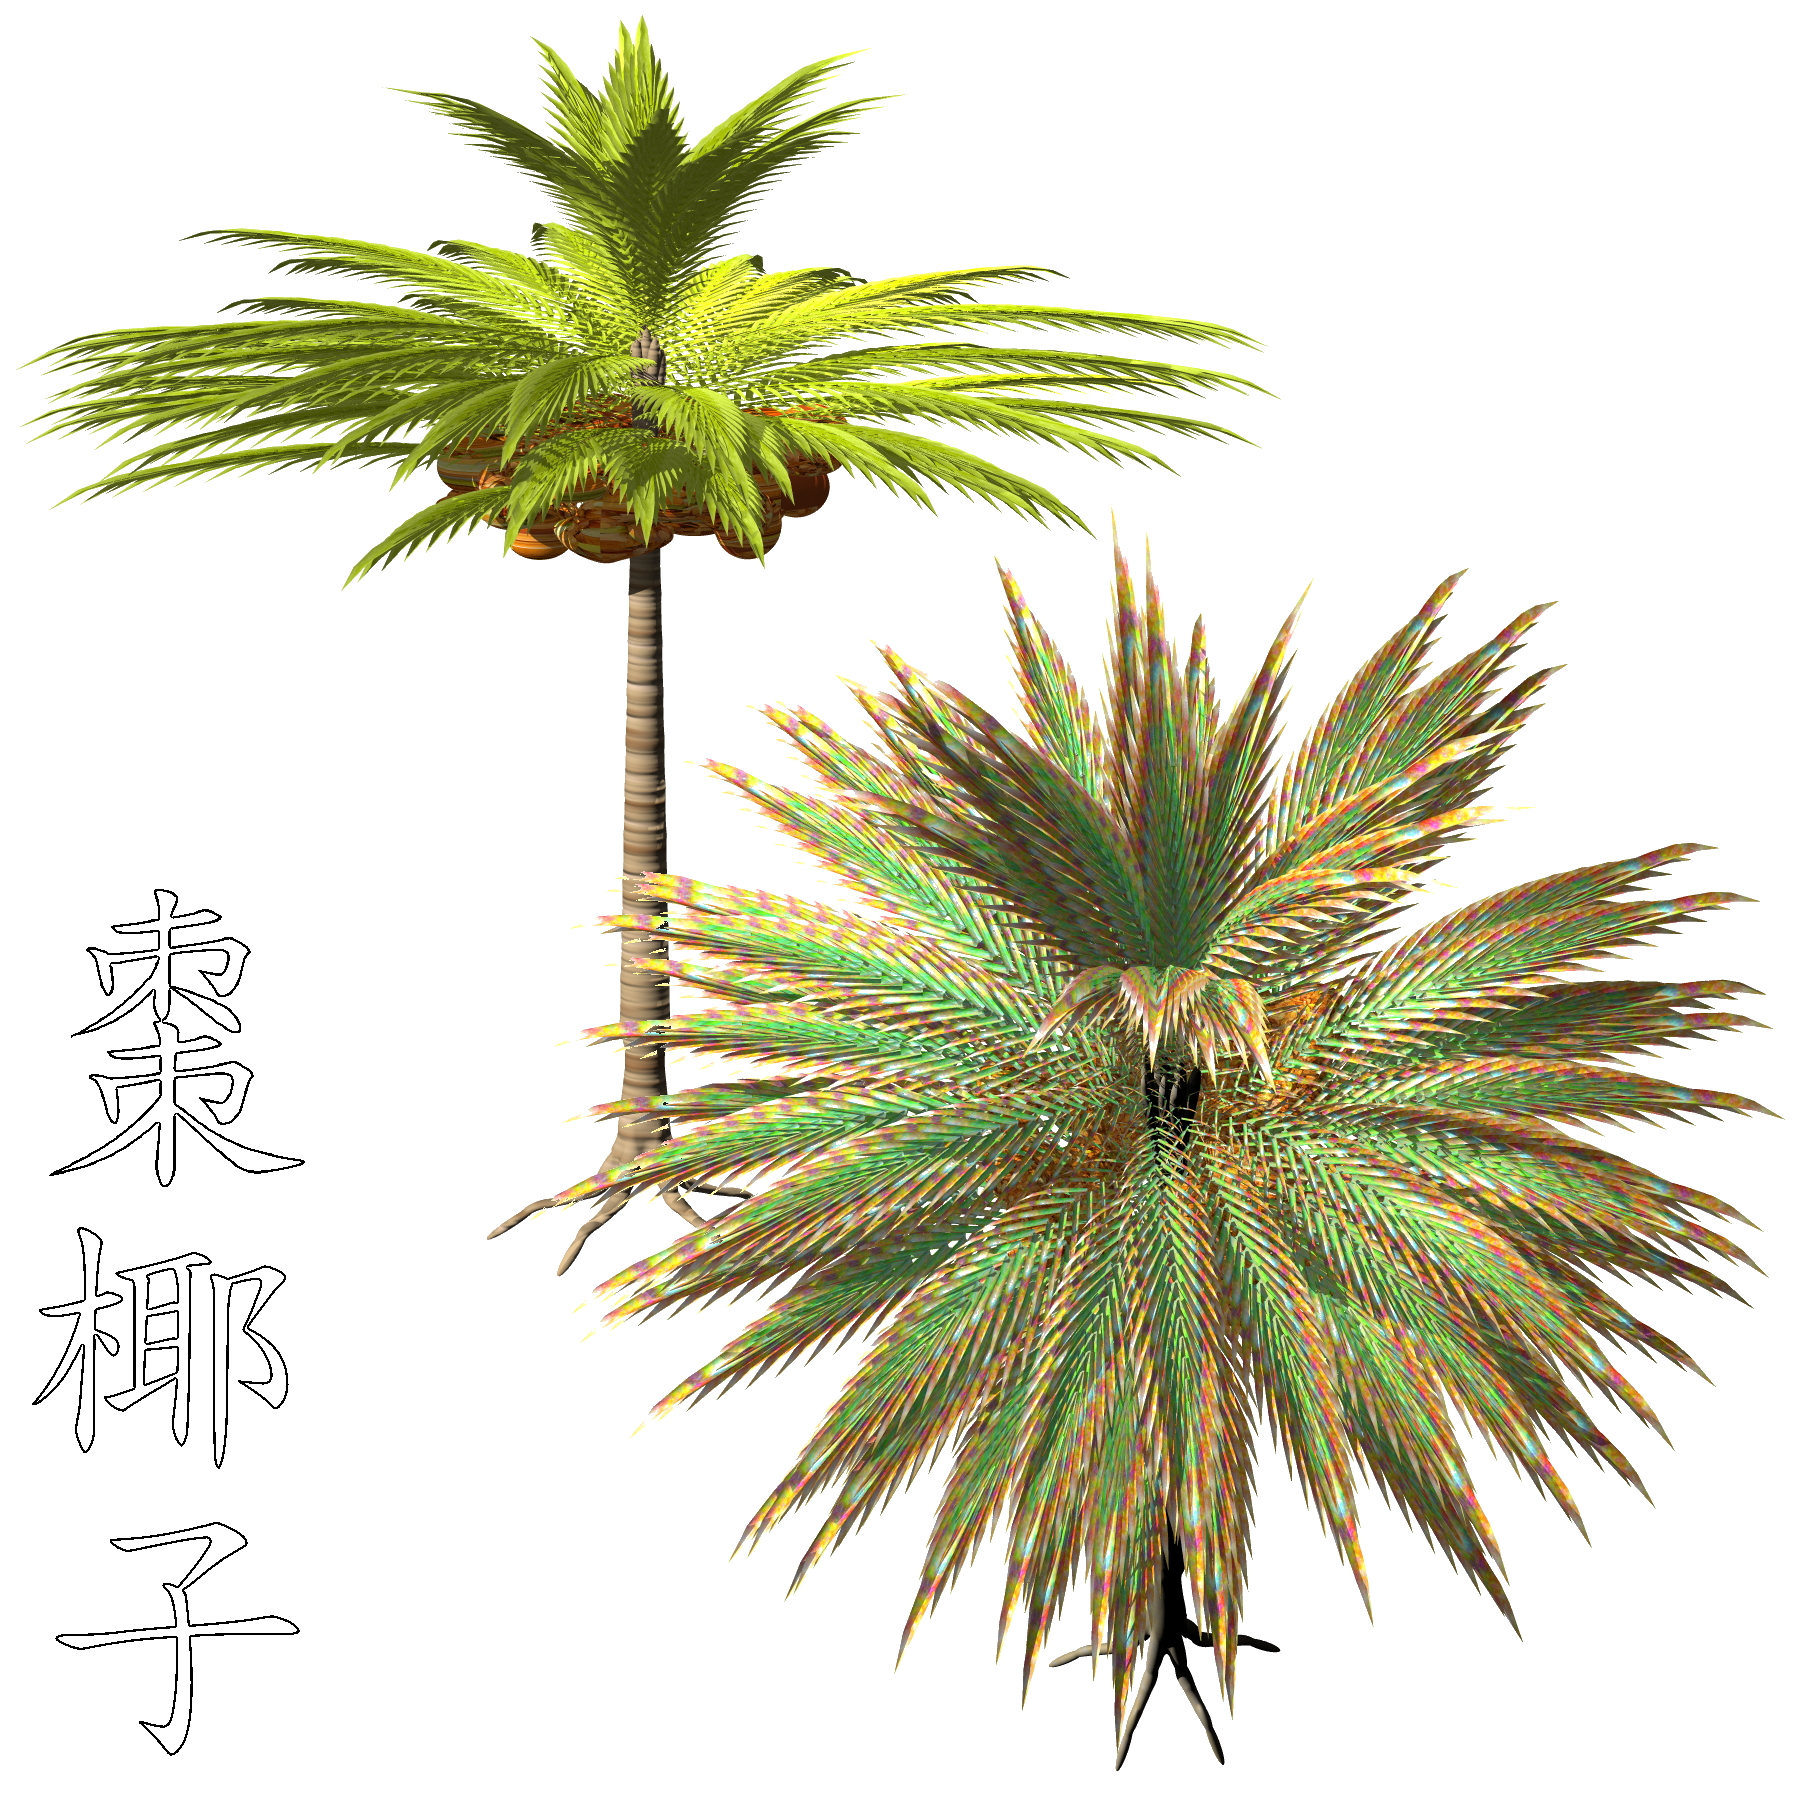 Photoshop Transparent Palm Trees